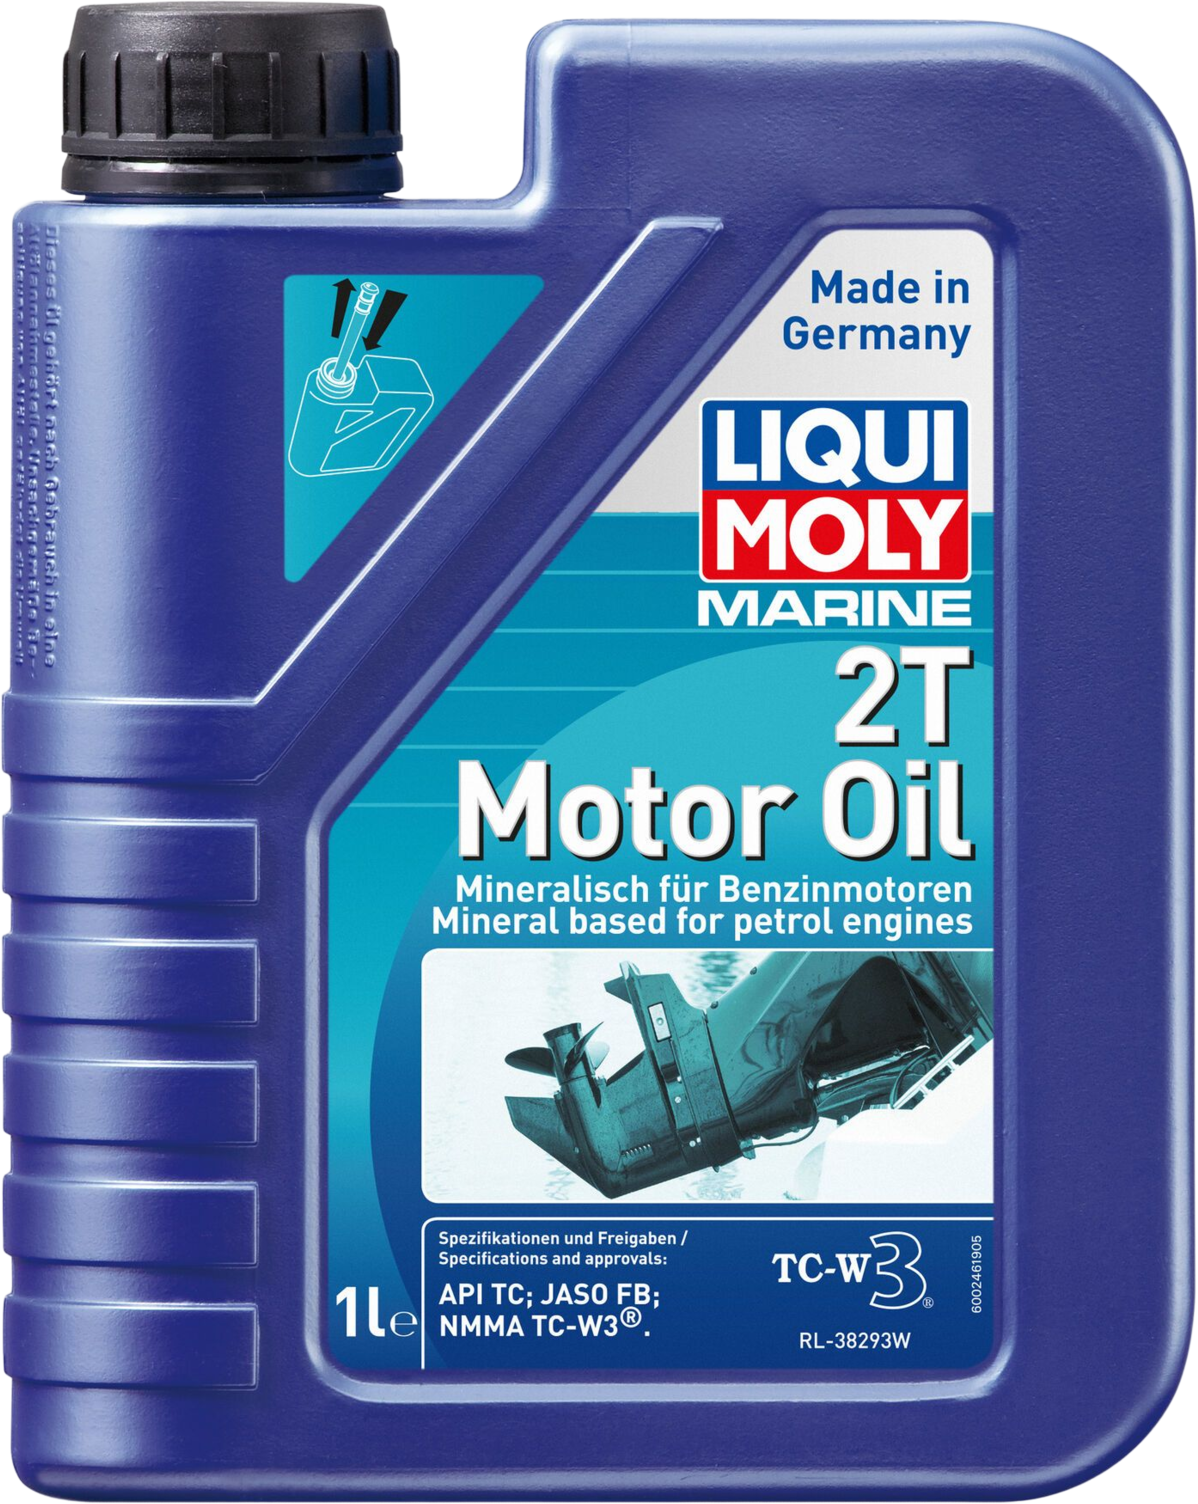 Liqui Moly Marine 2T Motor Oil, 6 x 1 lt detail 2